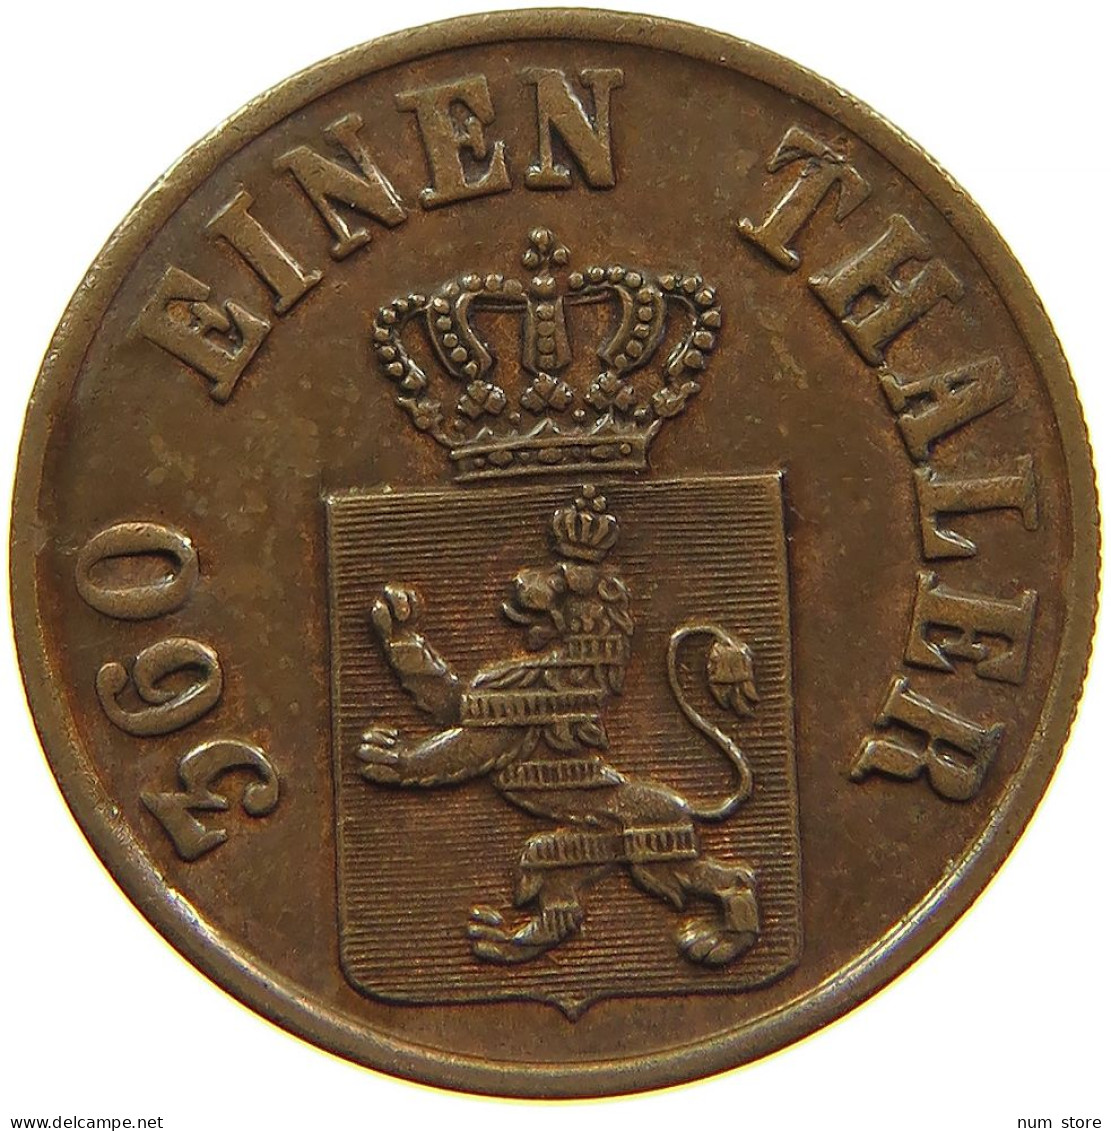 GERMAN STATES 1 HELLER 1860 HESSEN KASSEL Friedrich Wilhelm I. 1847-1866 #t032 1015 - Petites Monnaies & Autres Subdivisions